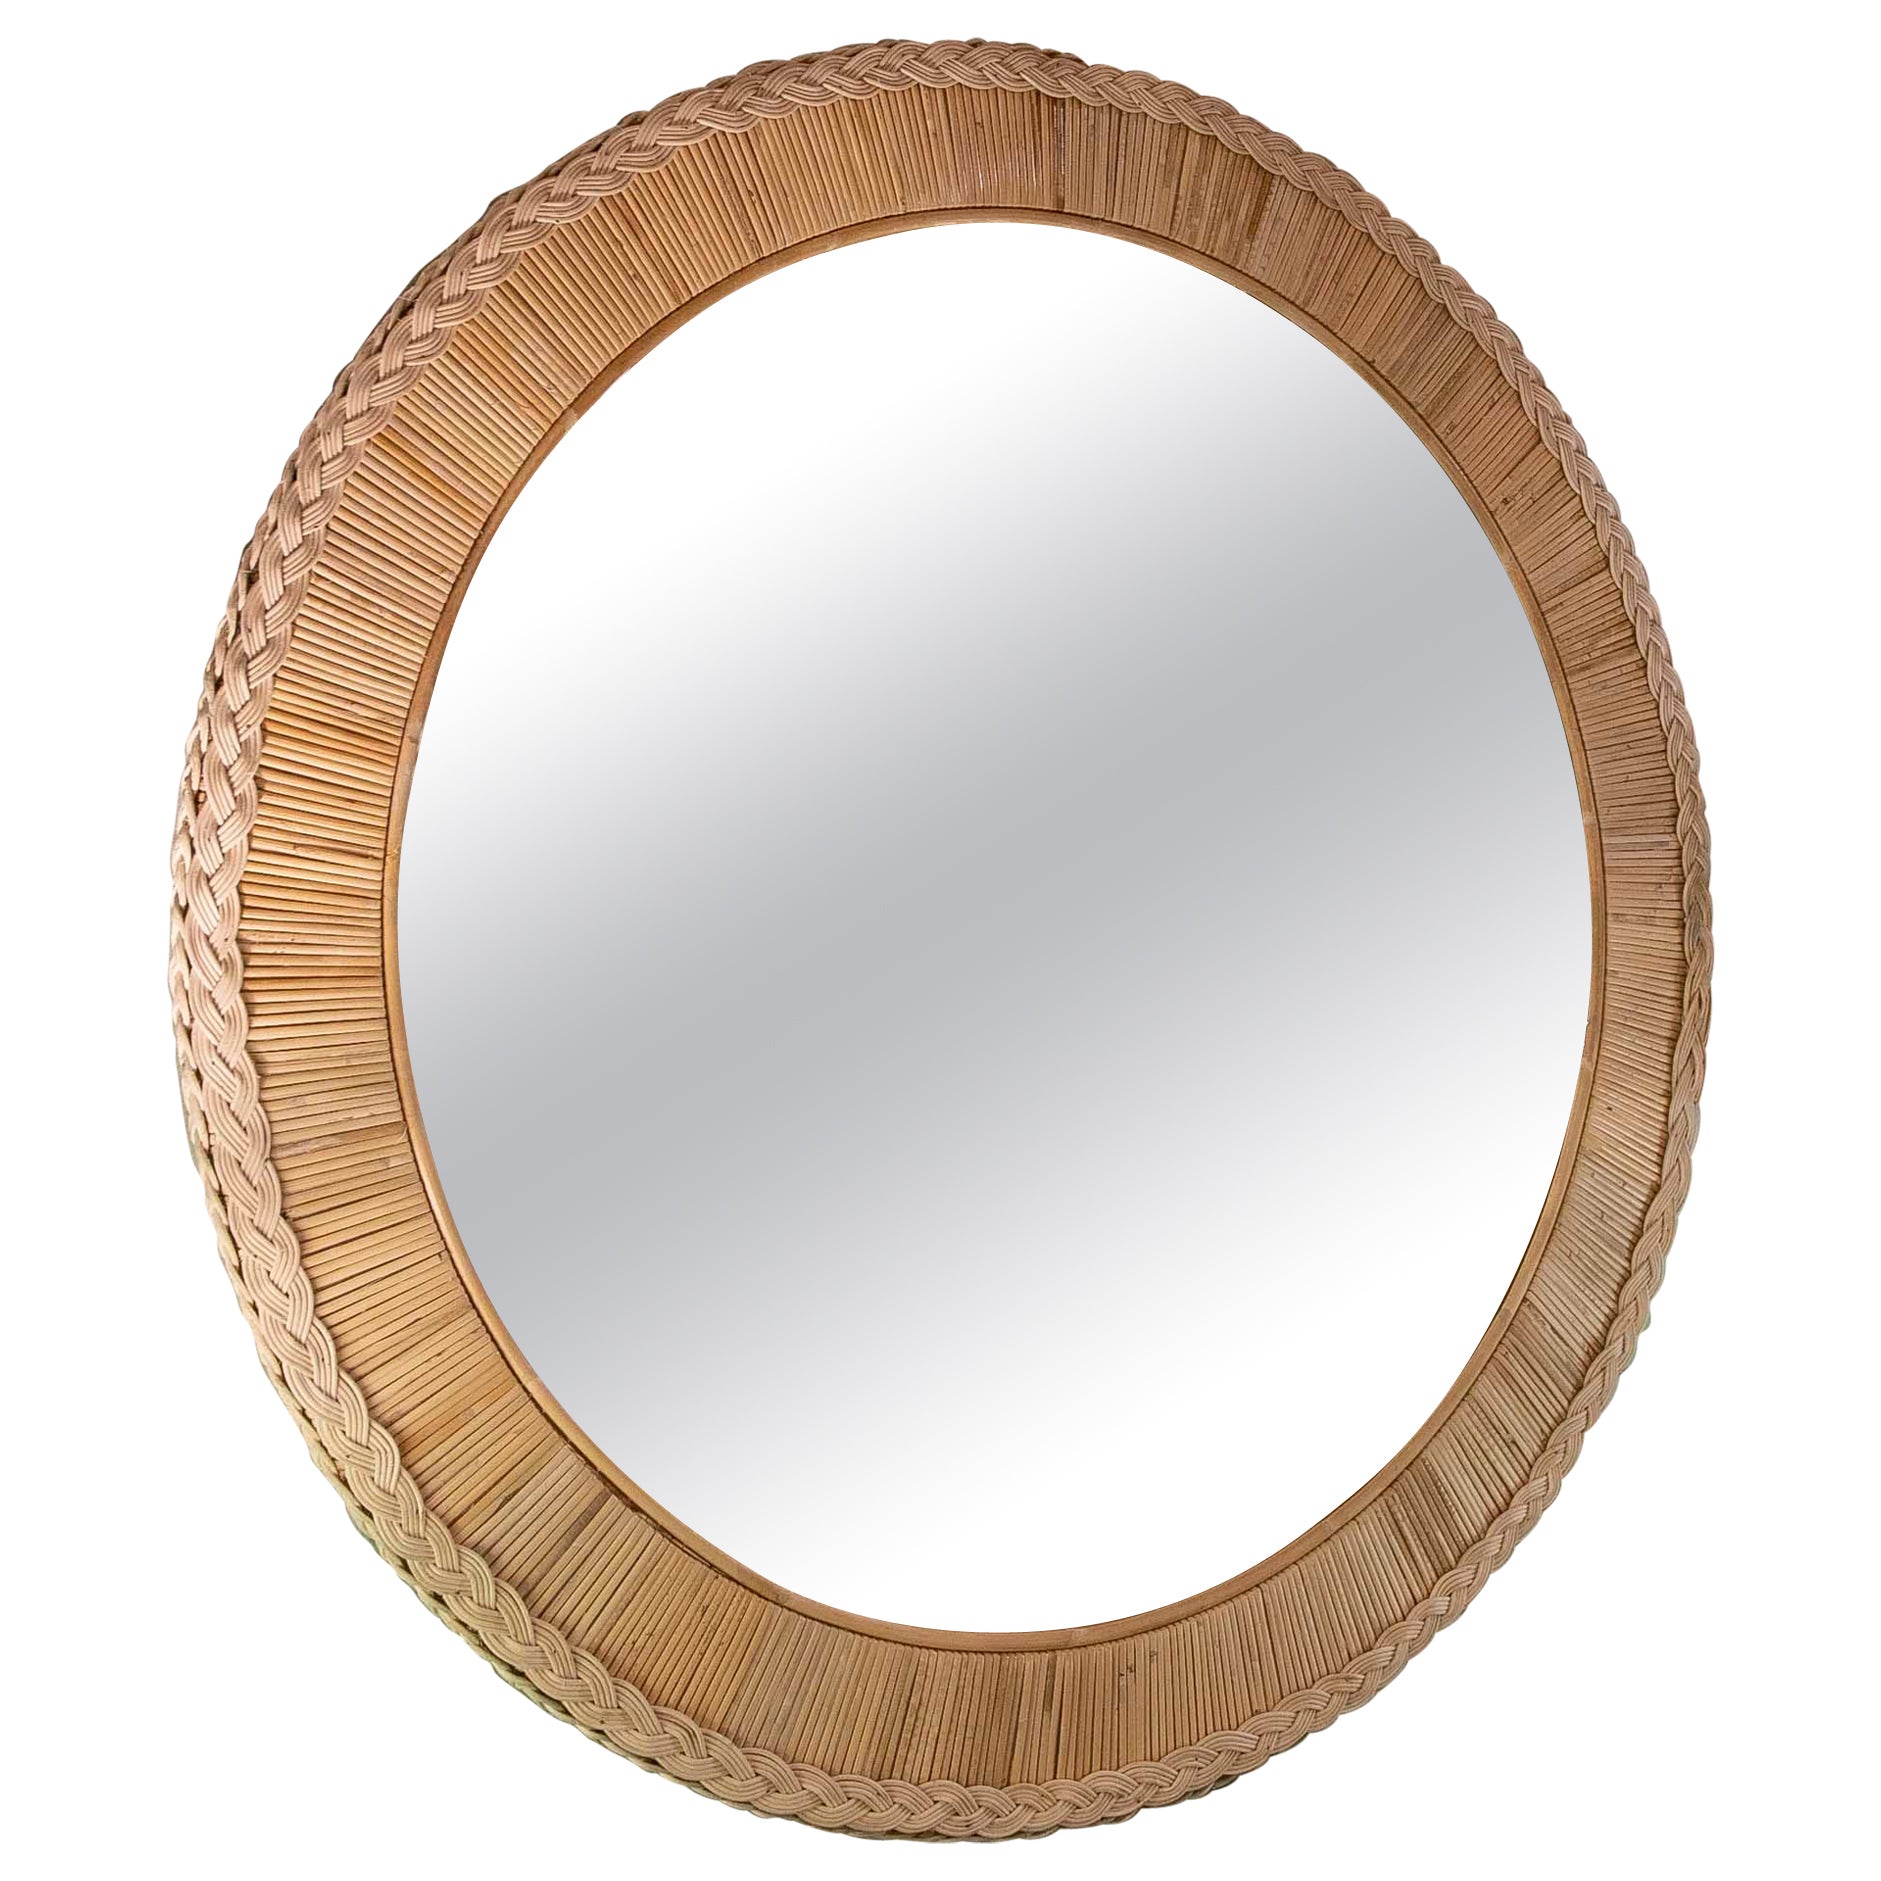 Handmade Round wicker wall mirror